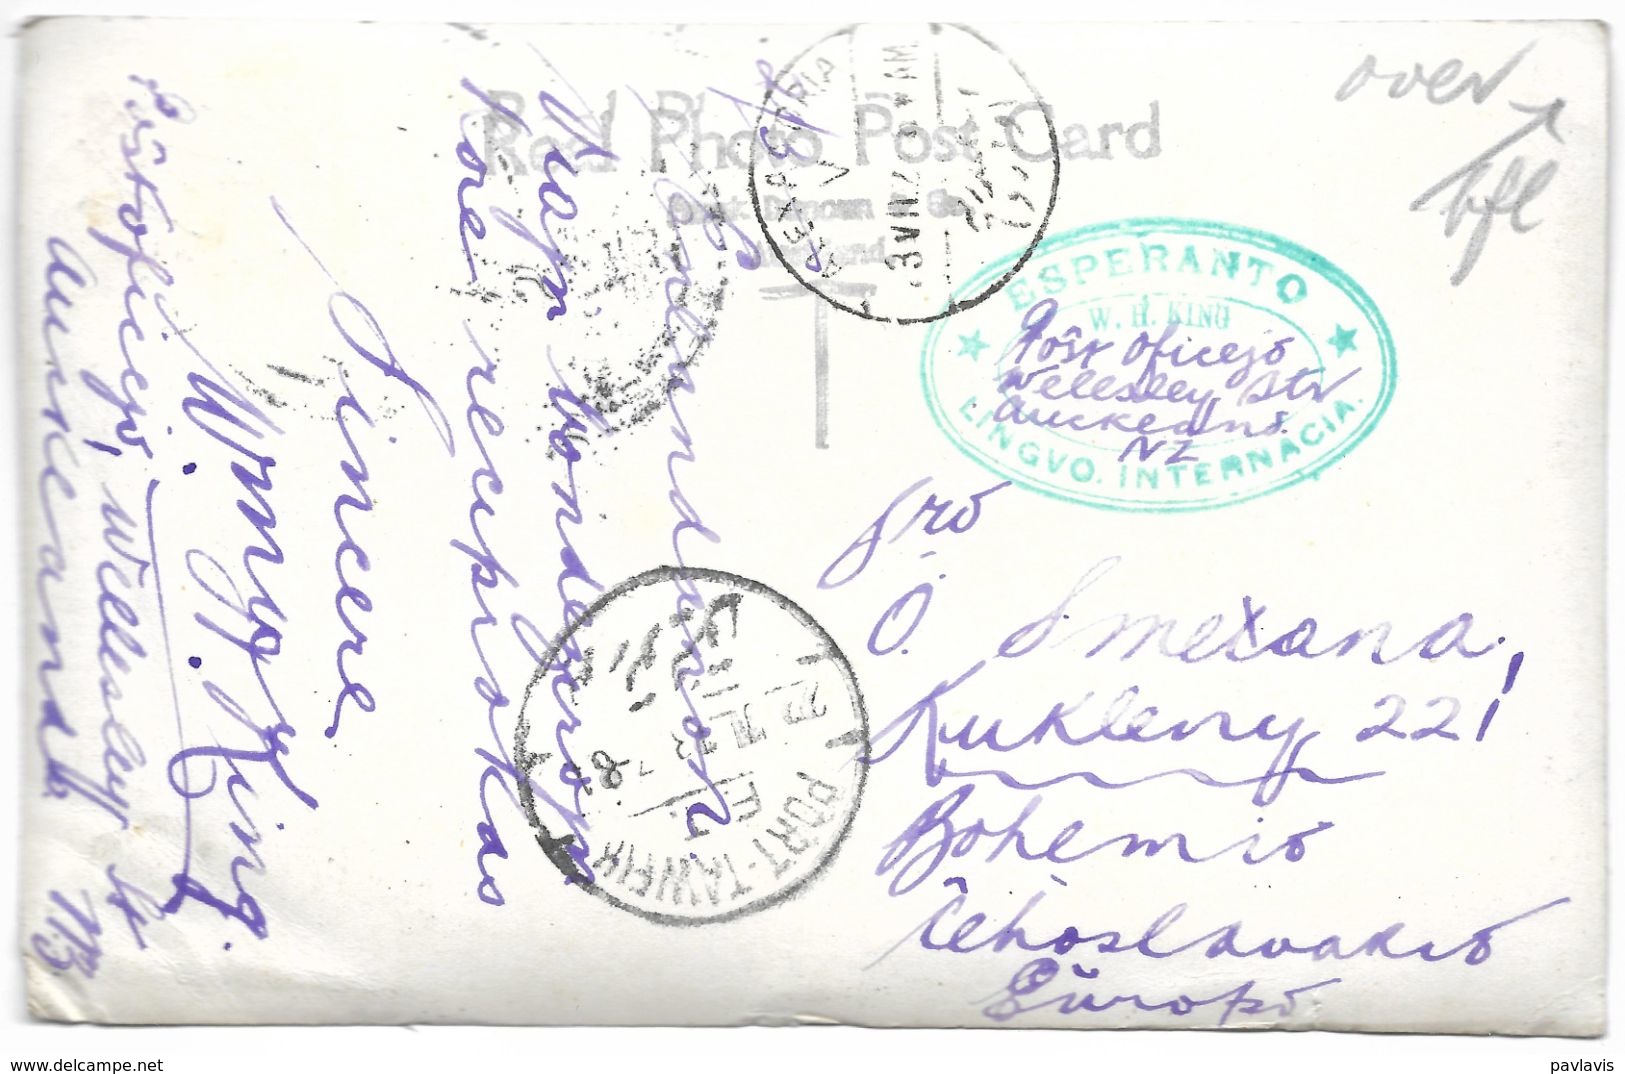 New Zealand – F. J. Denton Wanganui – Esperanto – A Stamp Auckland – Year 1923 - Oceania